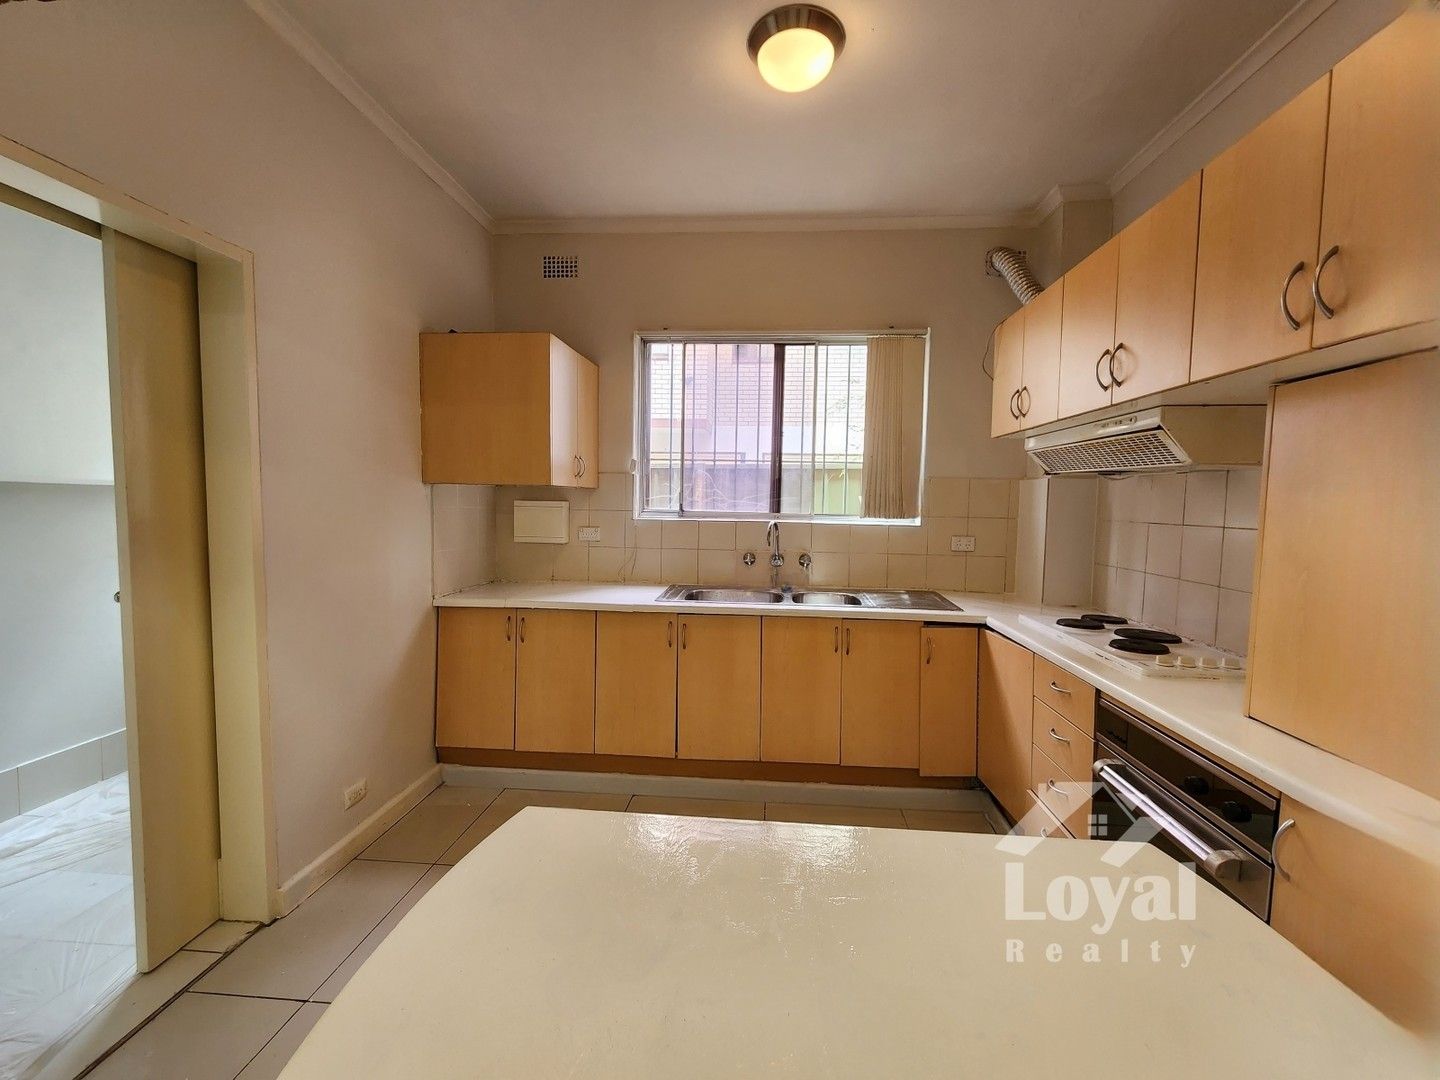 2 bedrooms Apartment / Unit / Flat in 1/22 Wigram Street HARRIS PARK NSW, 2150